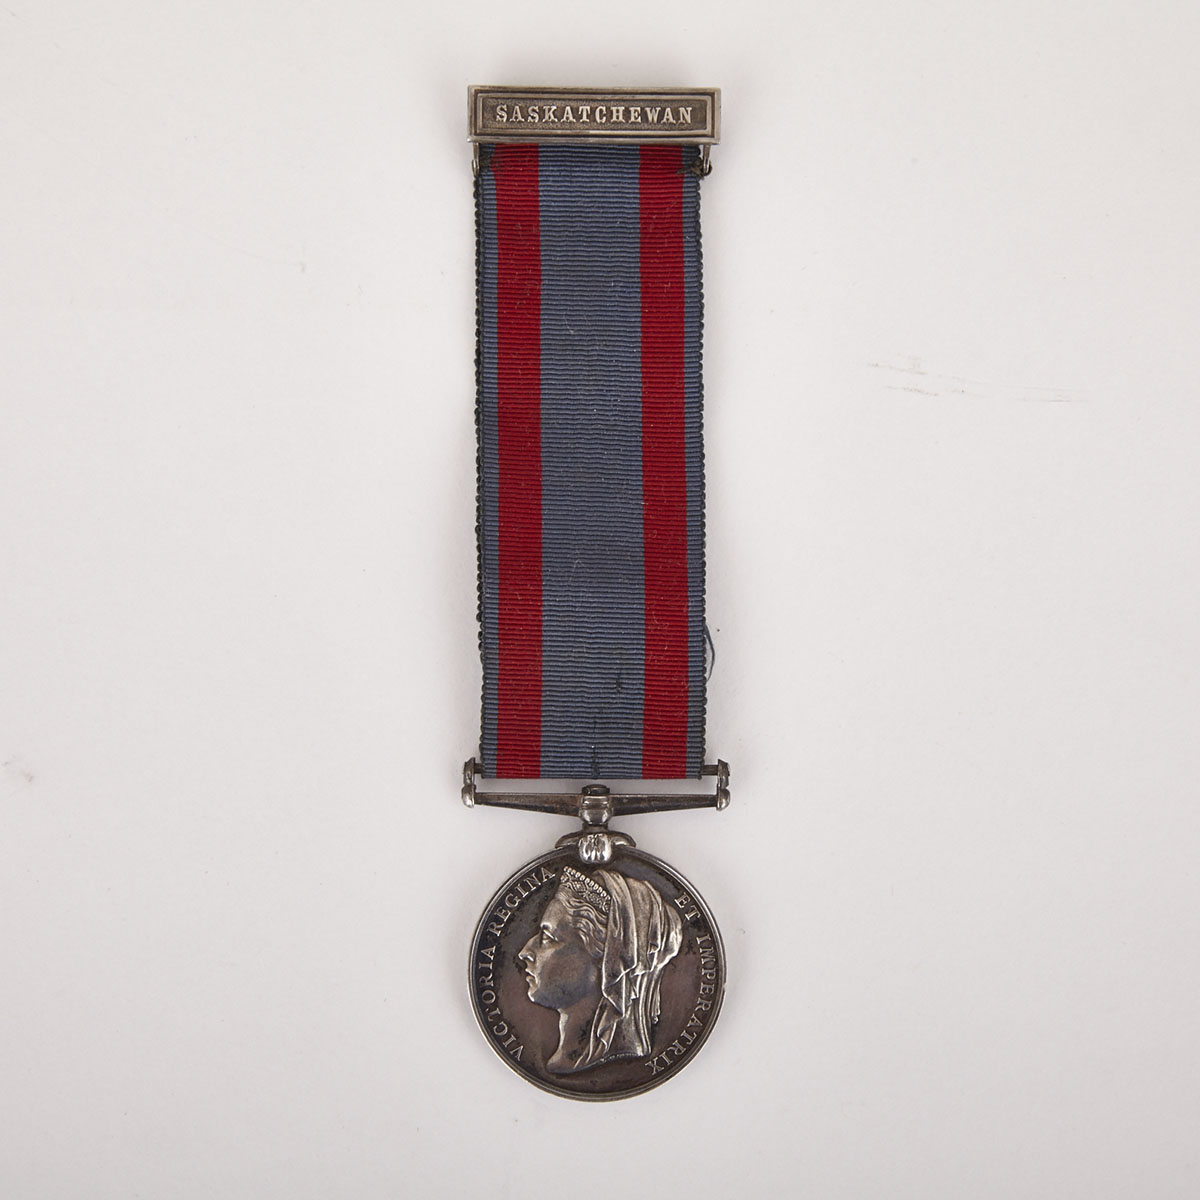 North West Rebellion: North West Canada 1885 Medal to Lieutenant J. H. Morrison, Birtle, Infantry